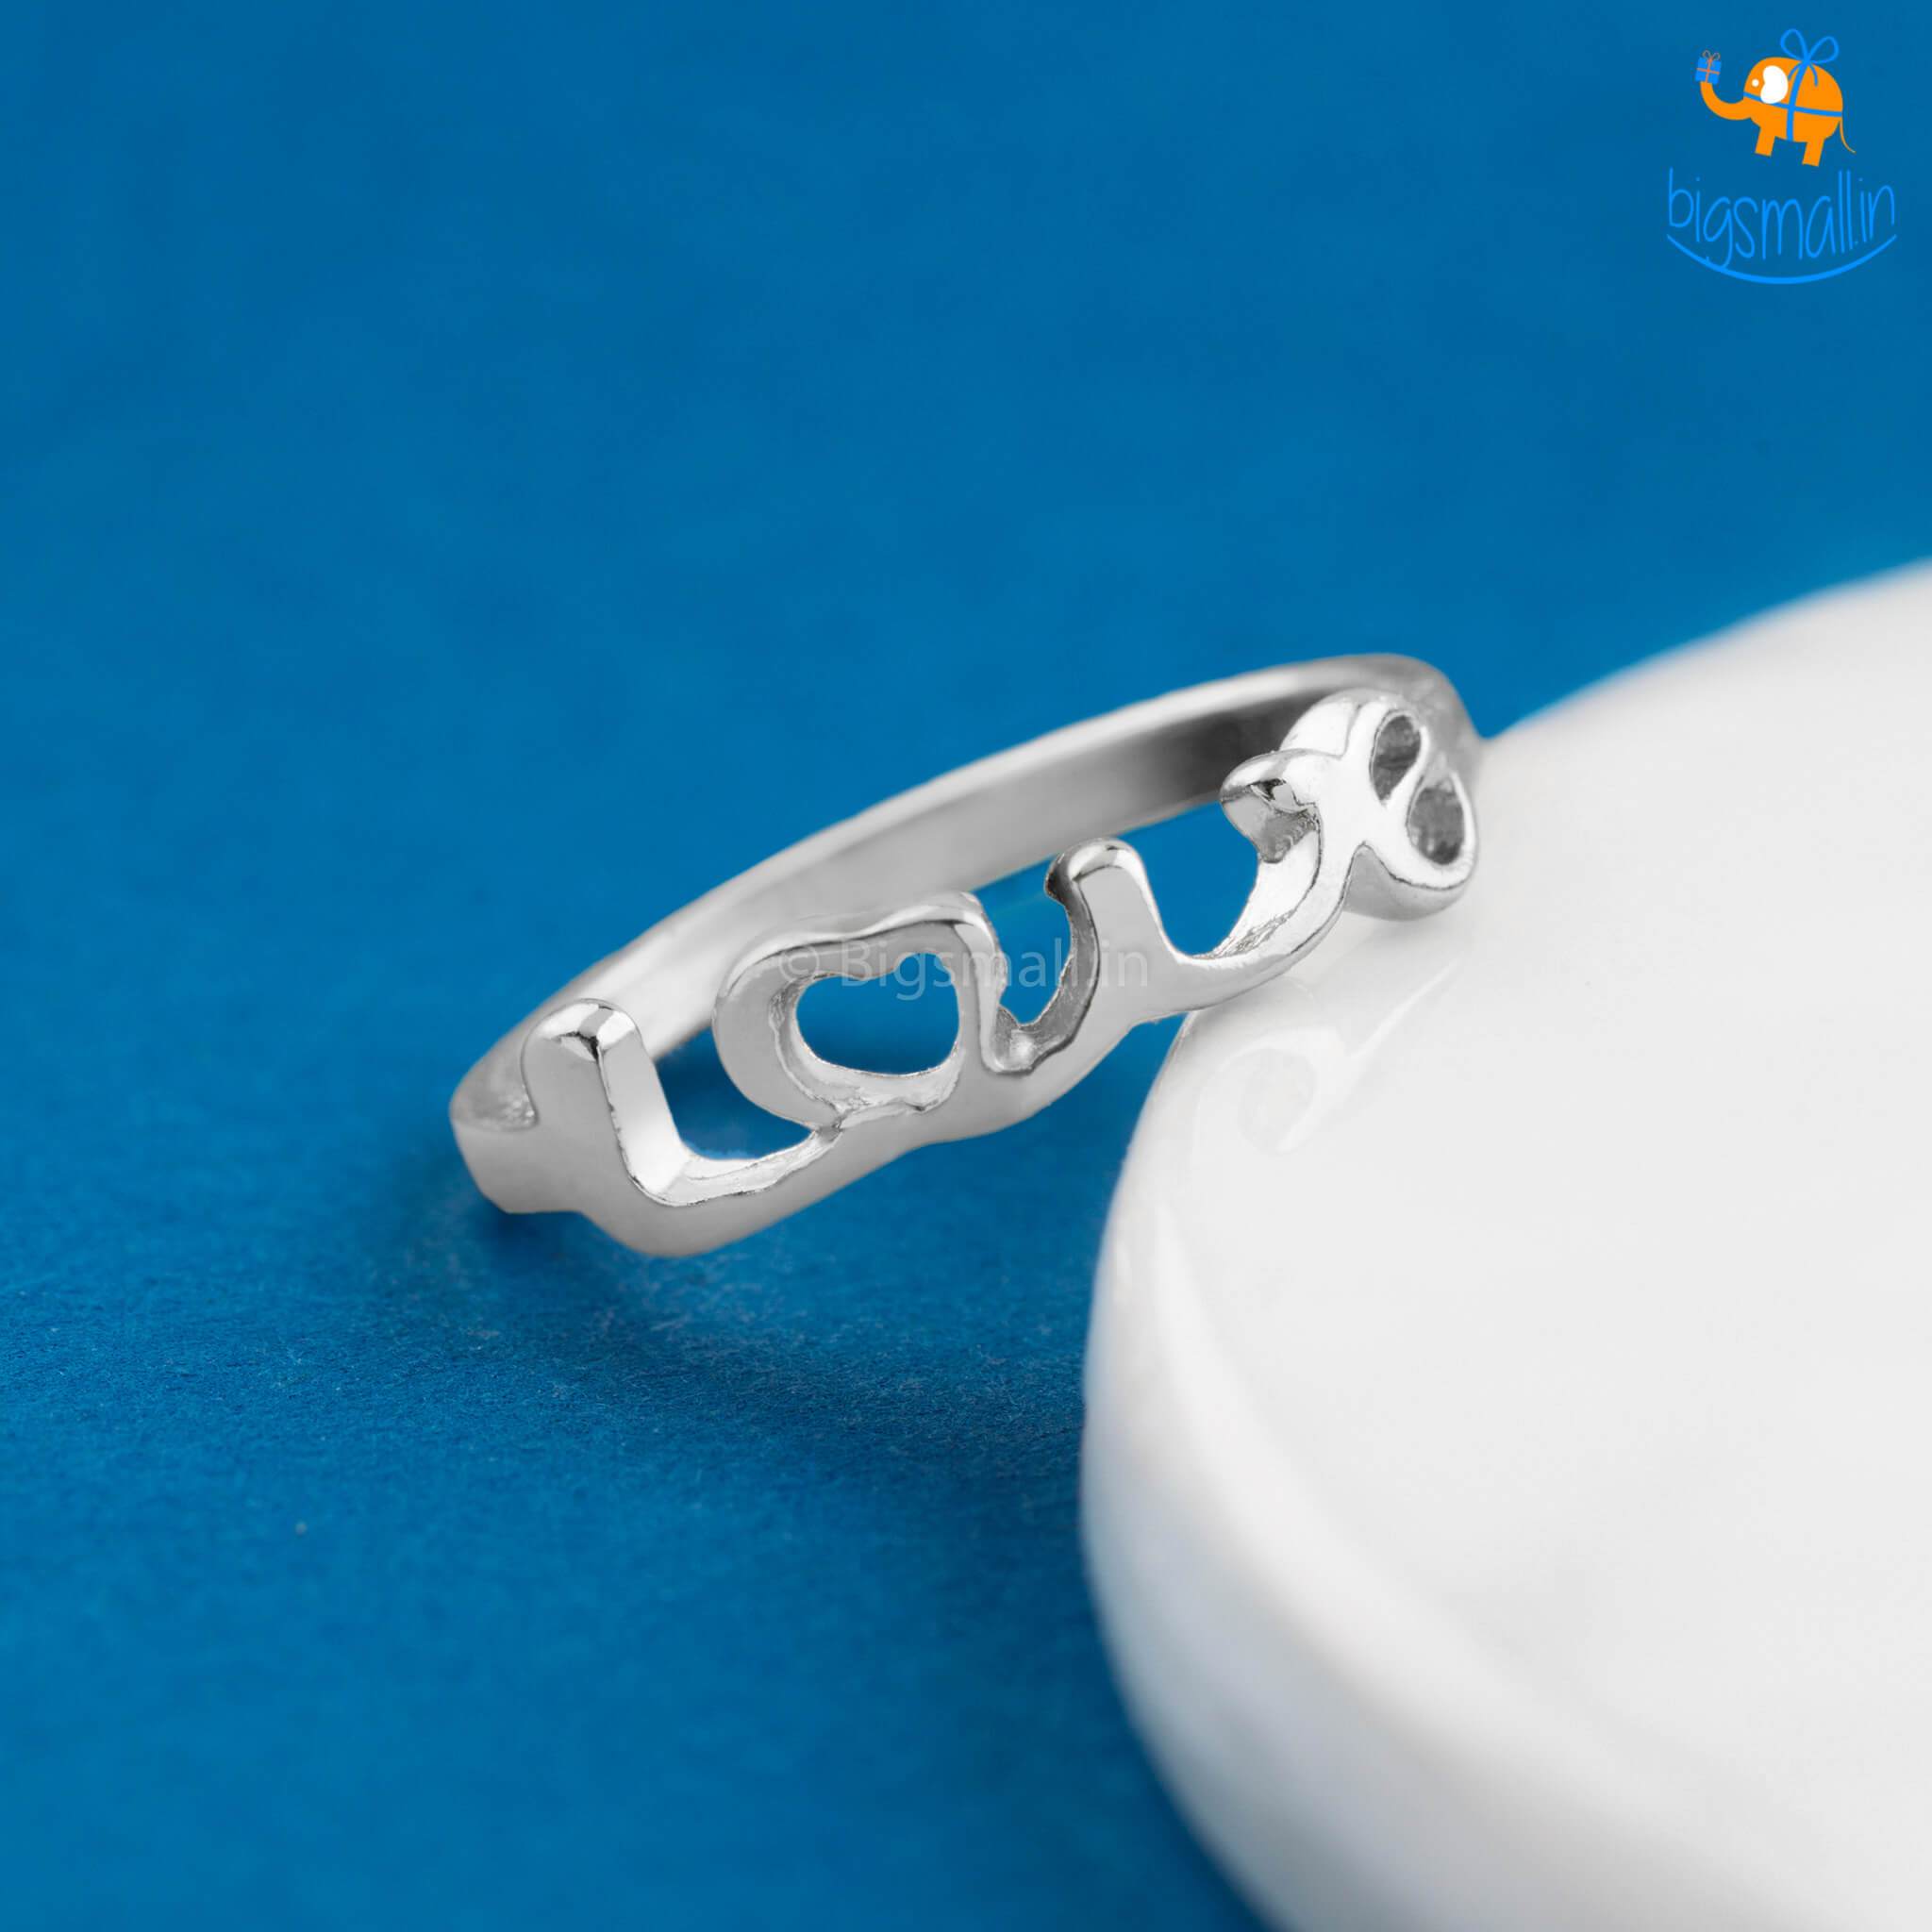 Stainless Steel Men's Engagement Rings, 6MM Love Token Anniversary Rings  for Men Silver Size 6L 1/2|Amazon.com